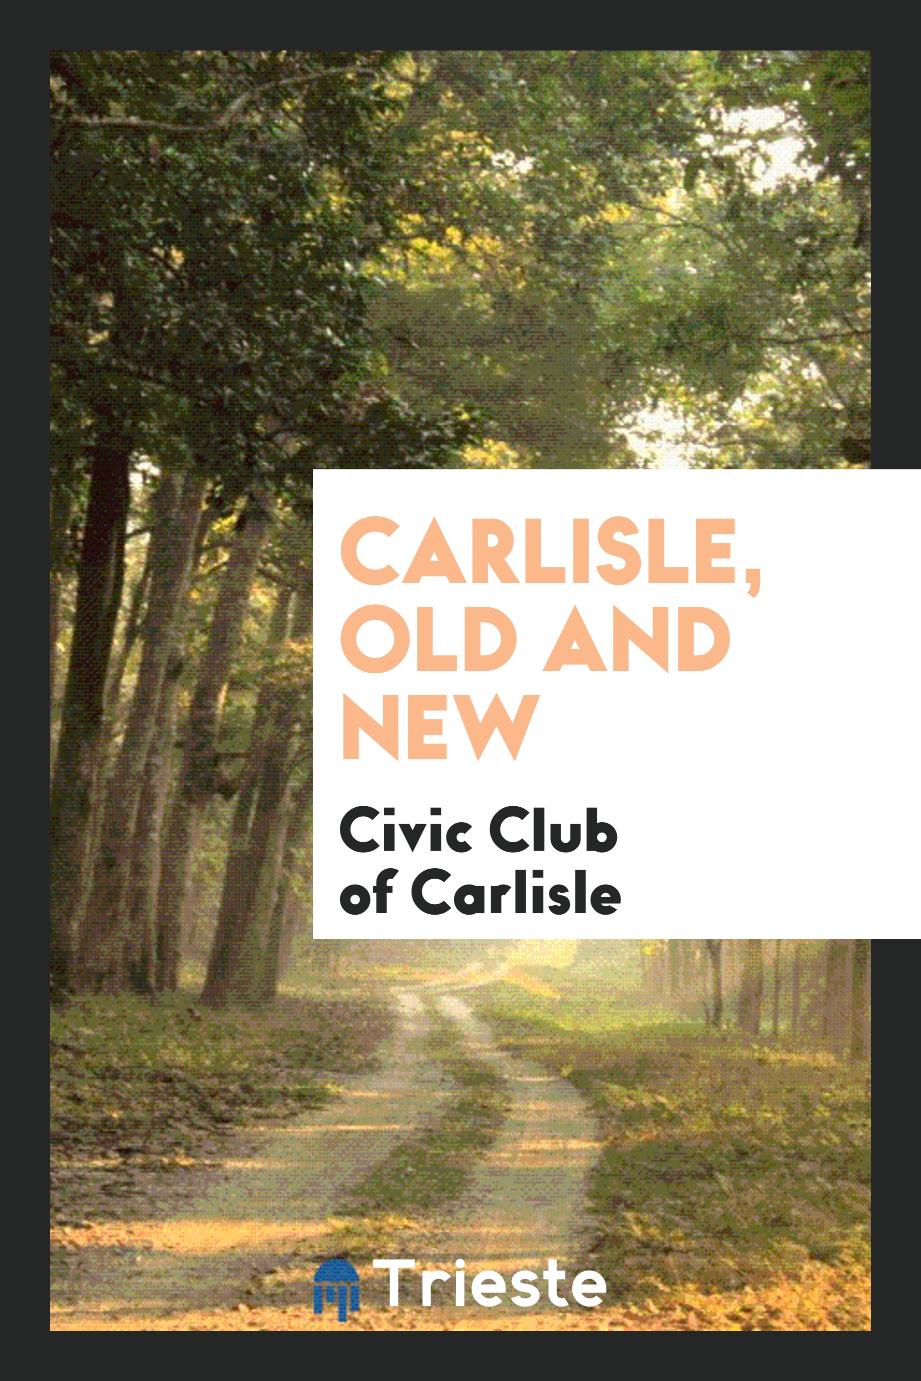 Carlisle, old and new